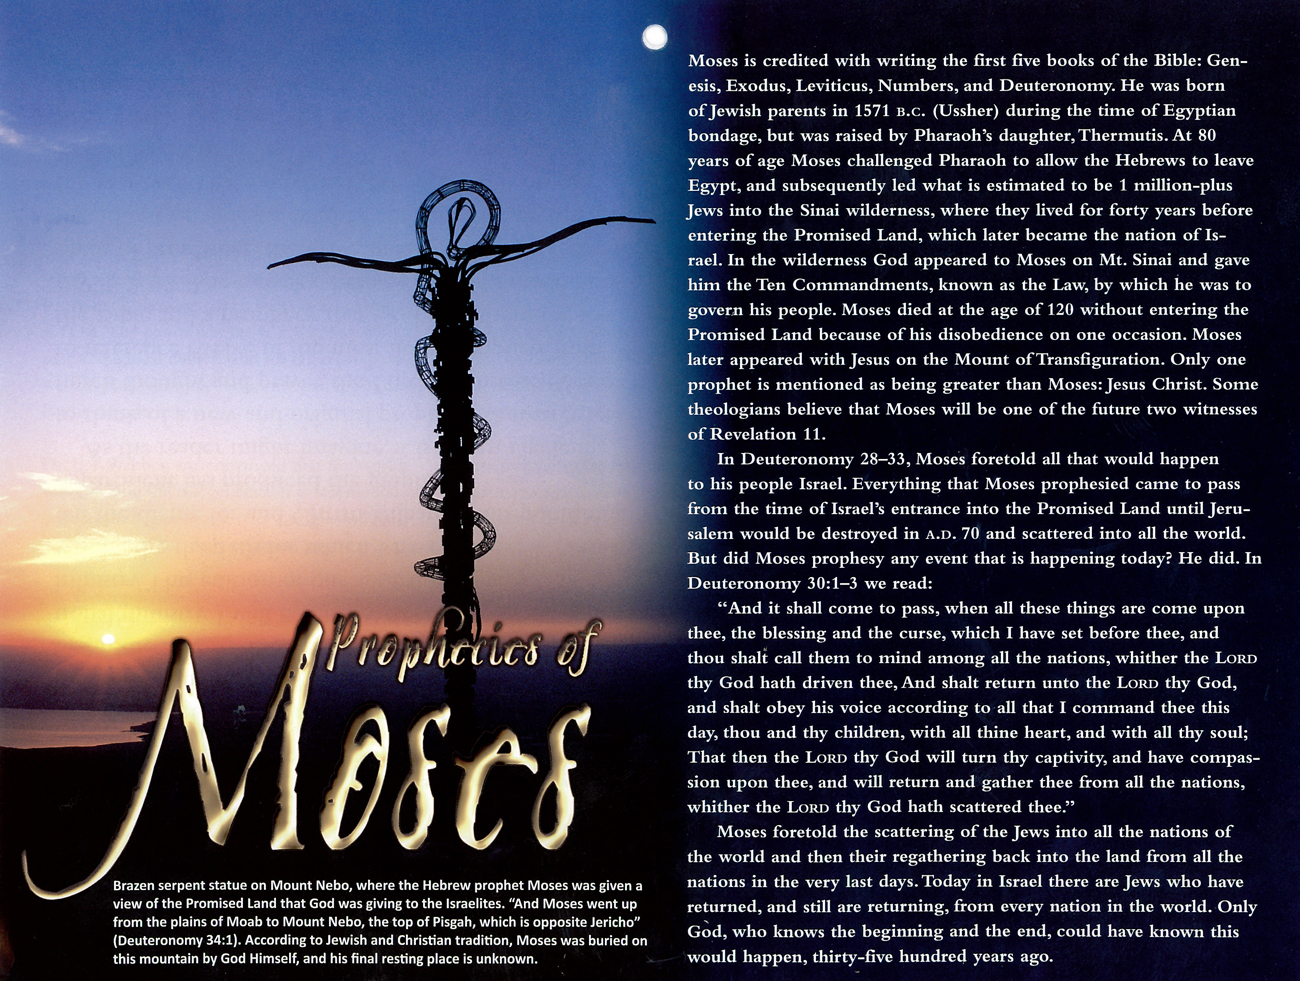 2011 Prophecy Calendar: January - Prophecies of Moses